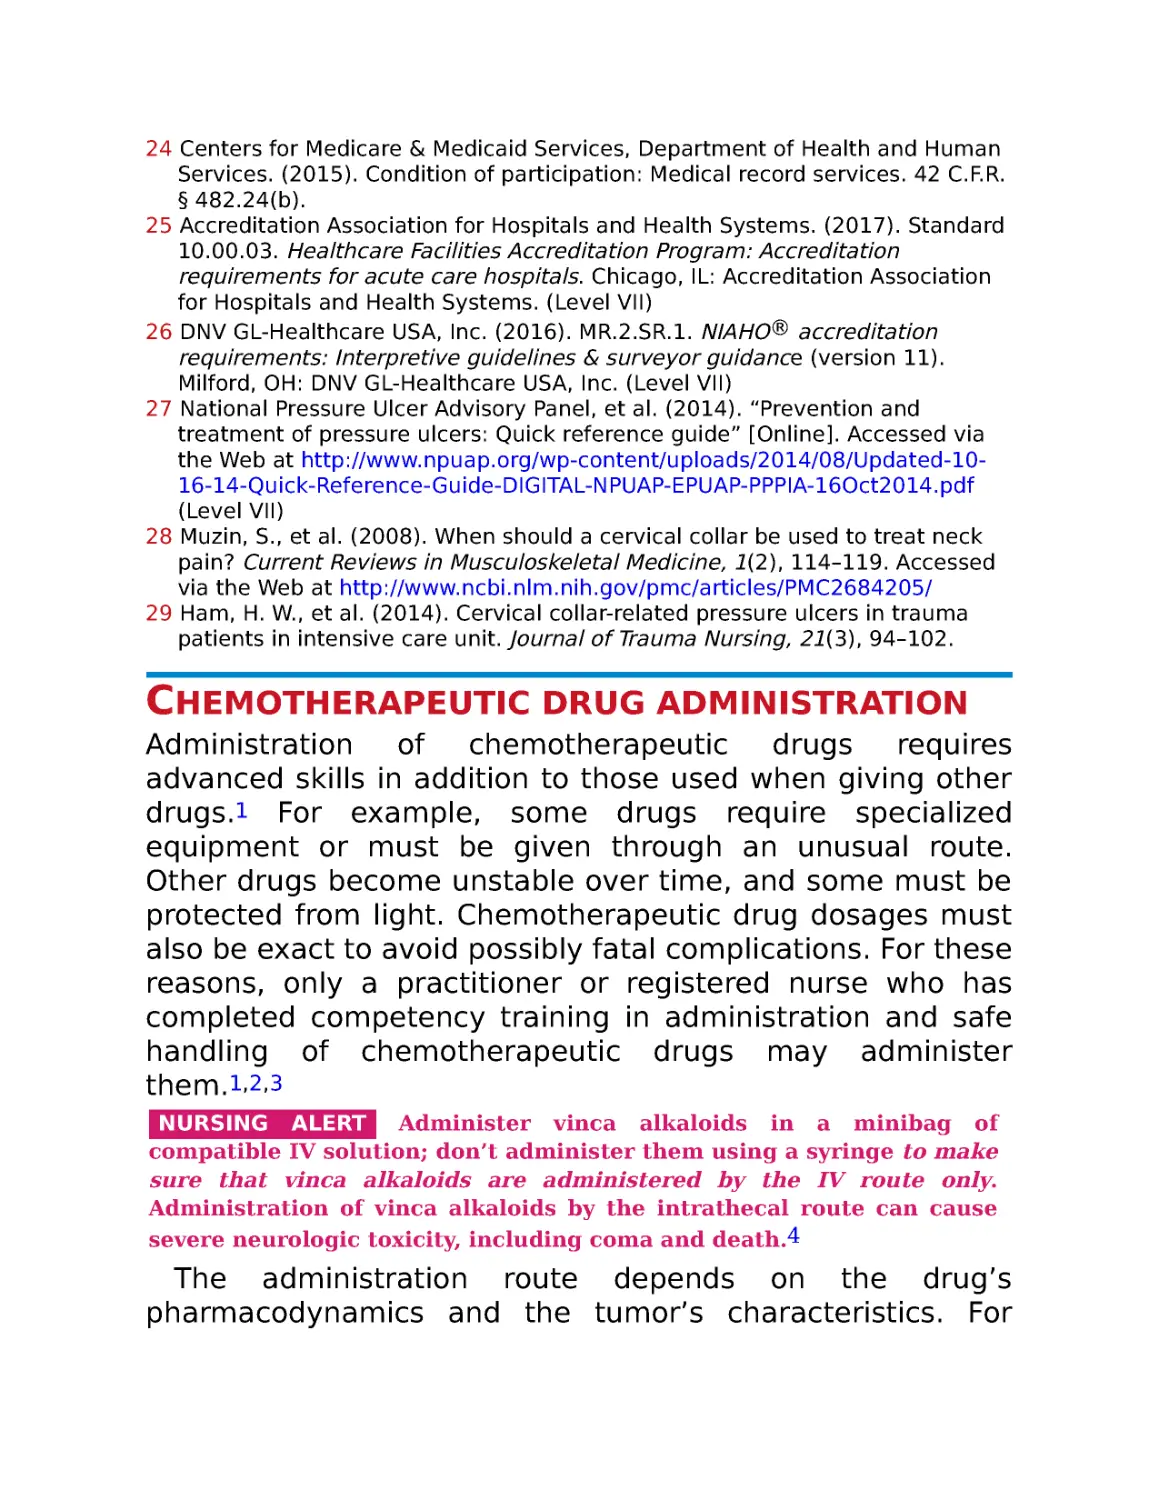 Chemotherapeutic drug administration